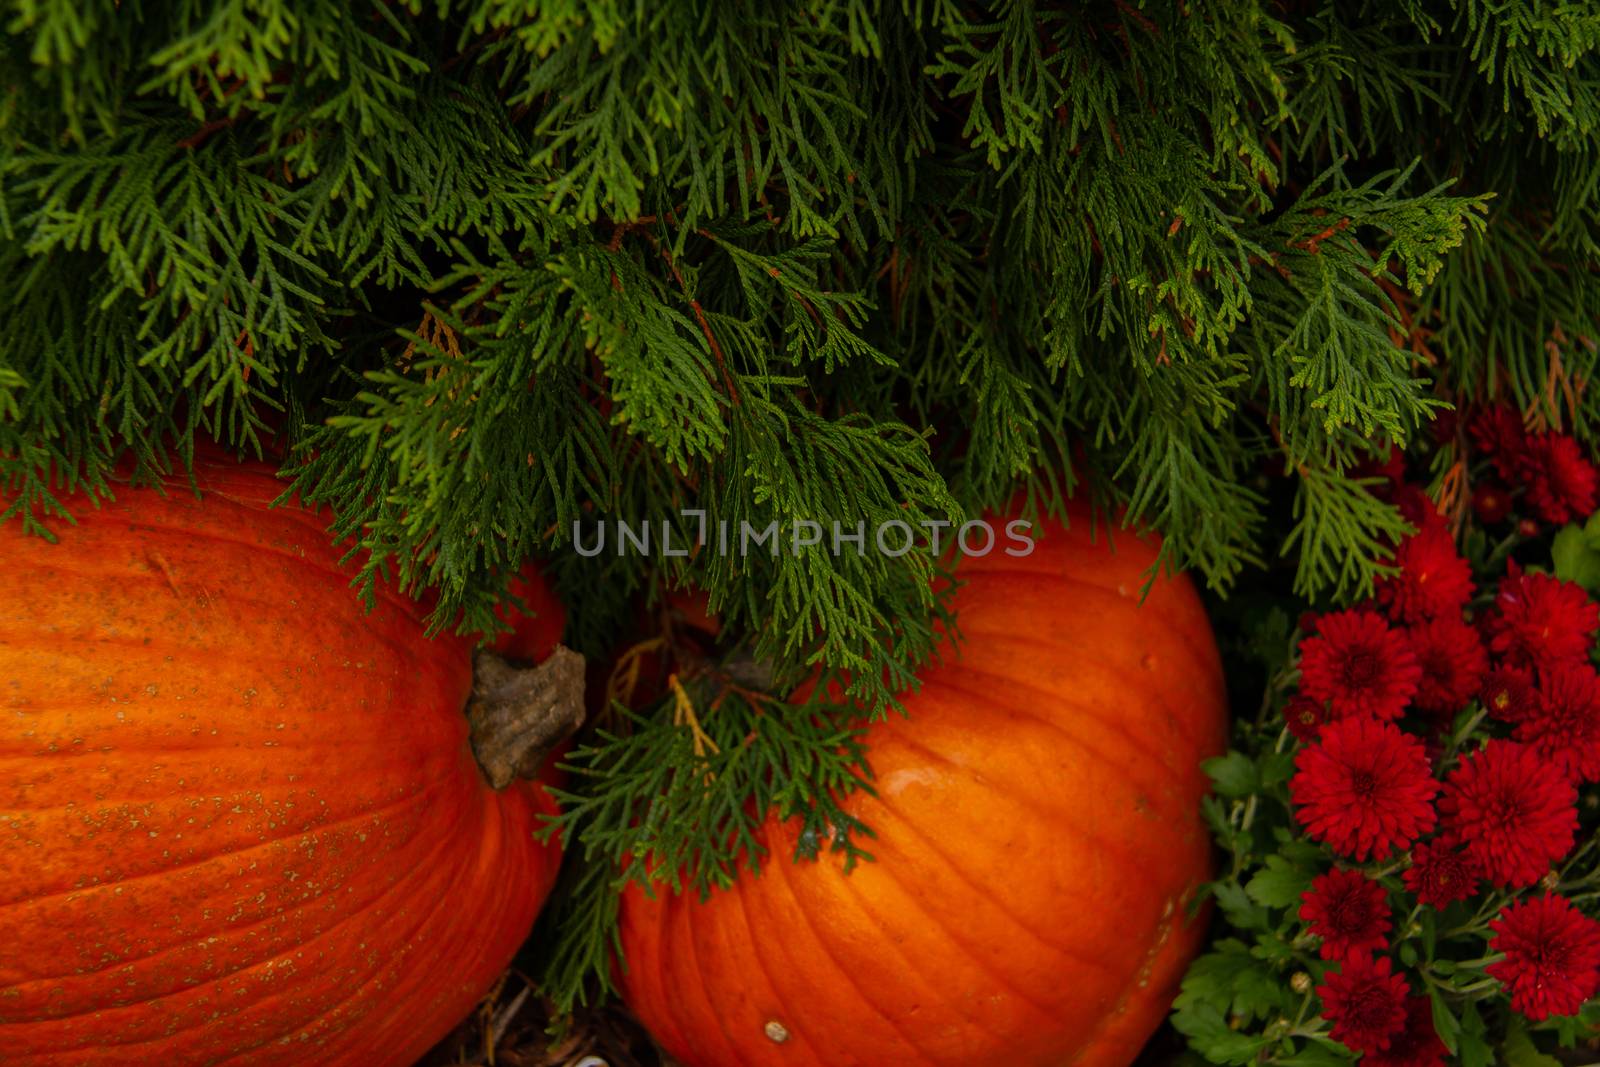 a lot of mini pumpkin at outdoor farmers market by bonilook